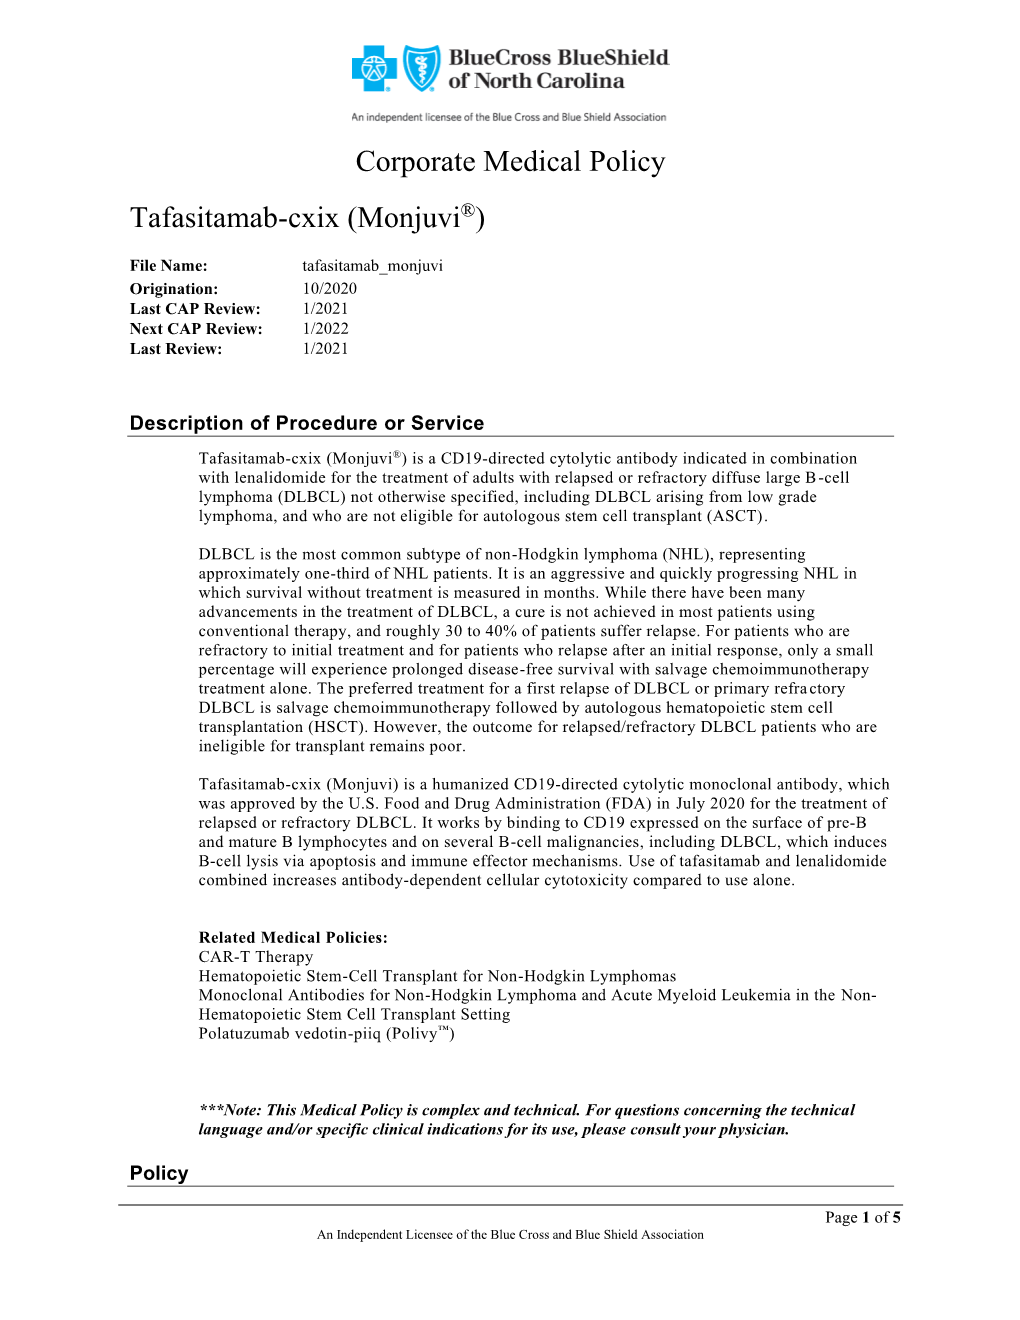 Corporate Medical Policy Tafasitamab-Cxix (Monjuvi®)